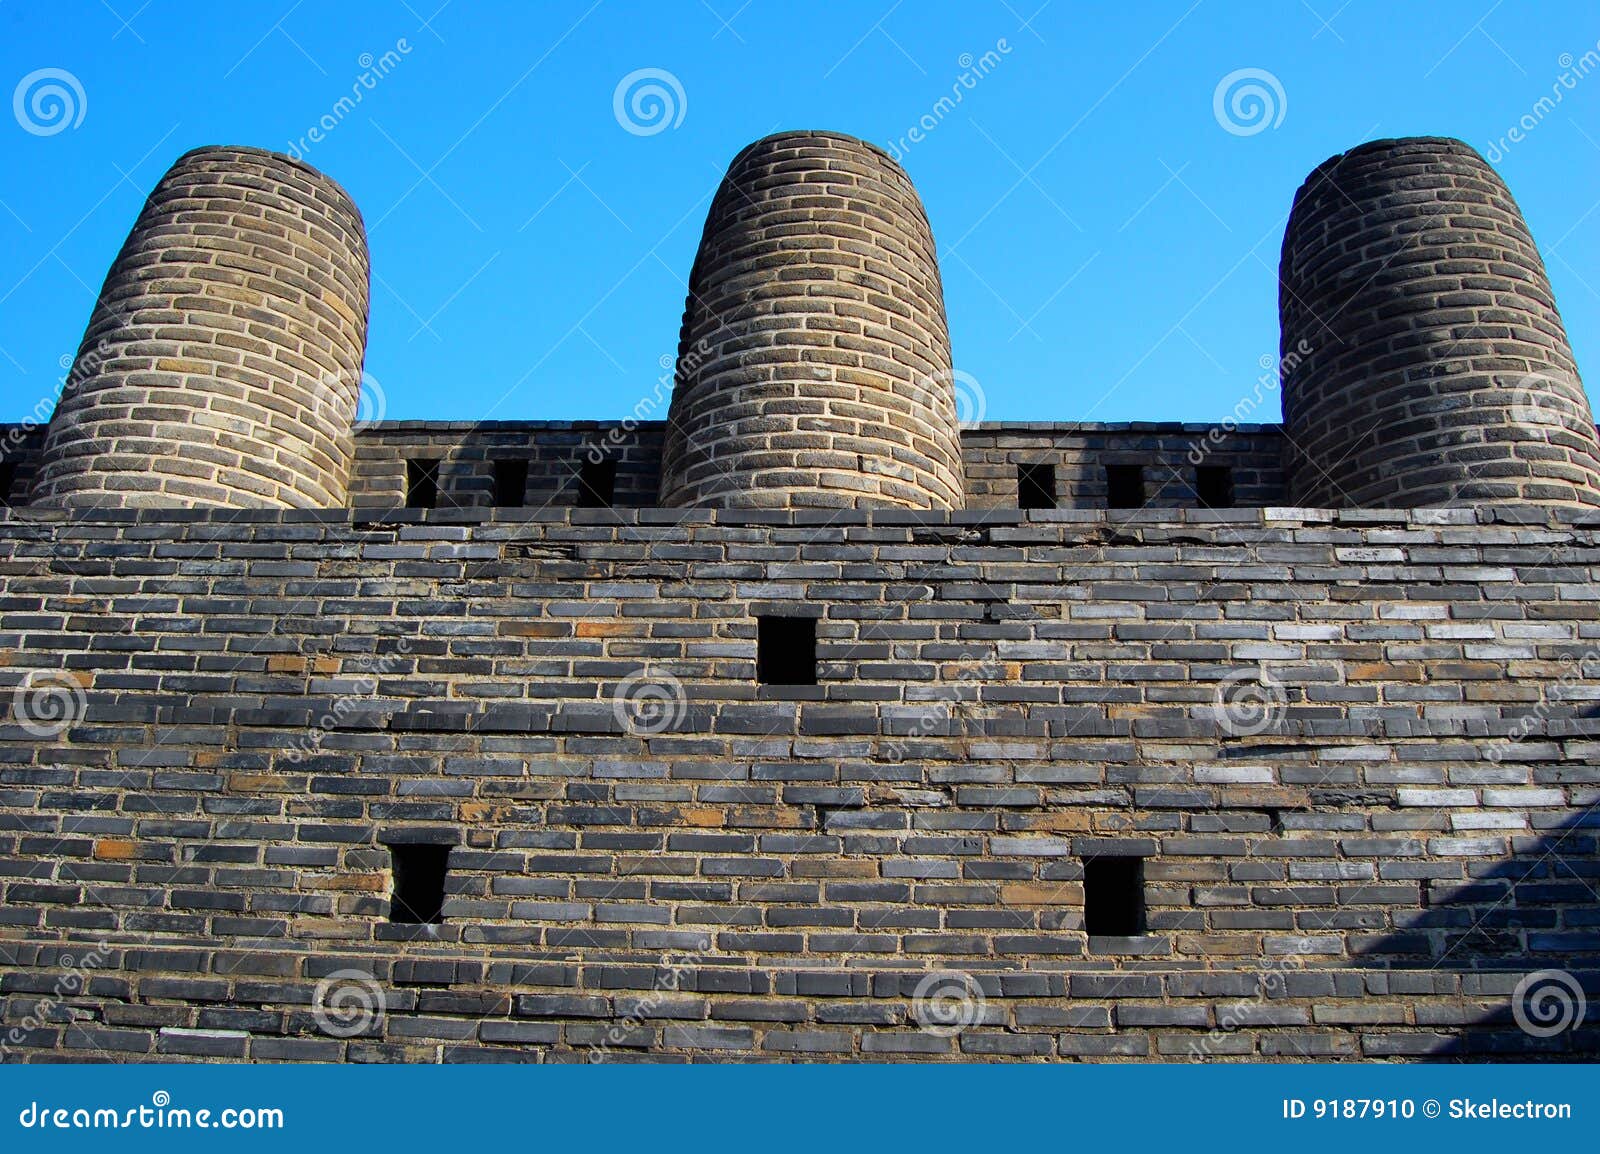 3 chimney in hwaseong fortress,suwon,